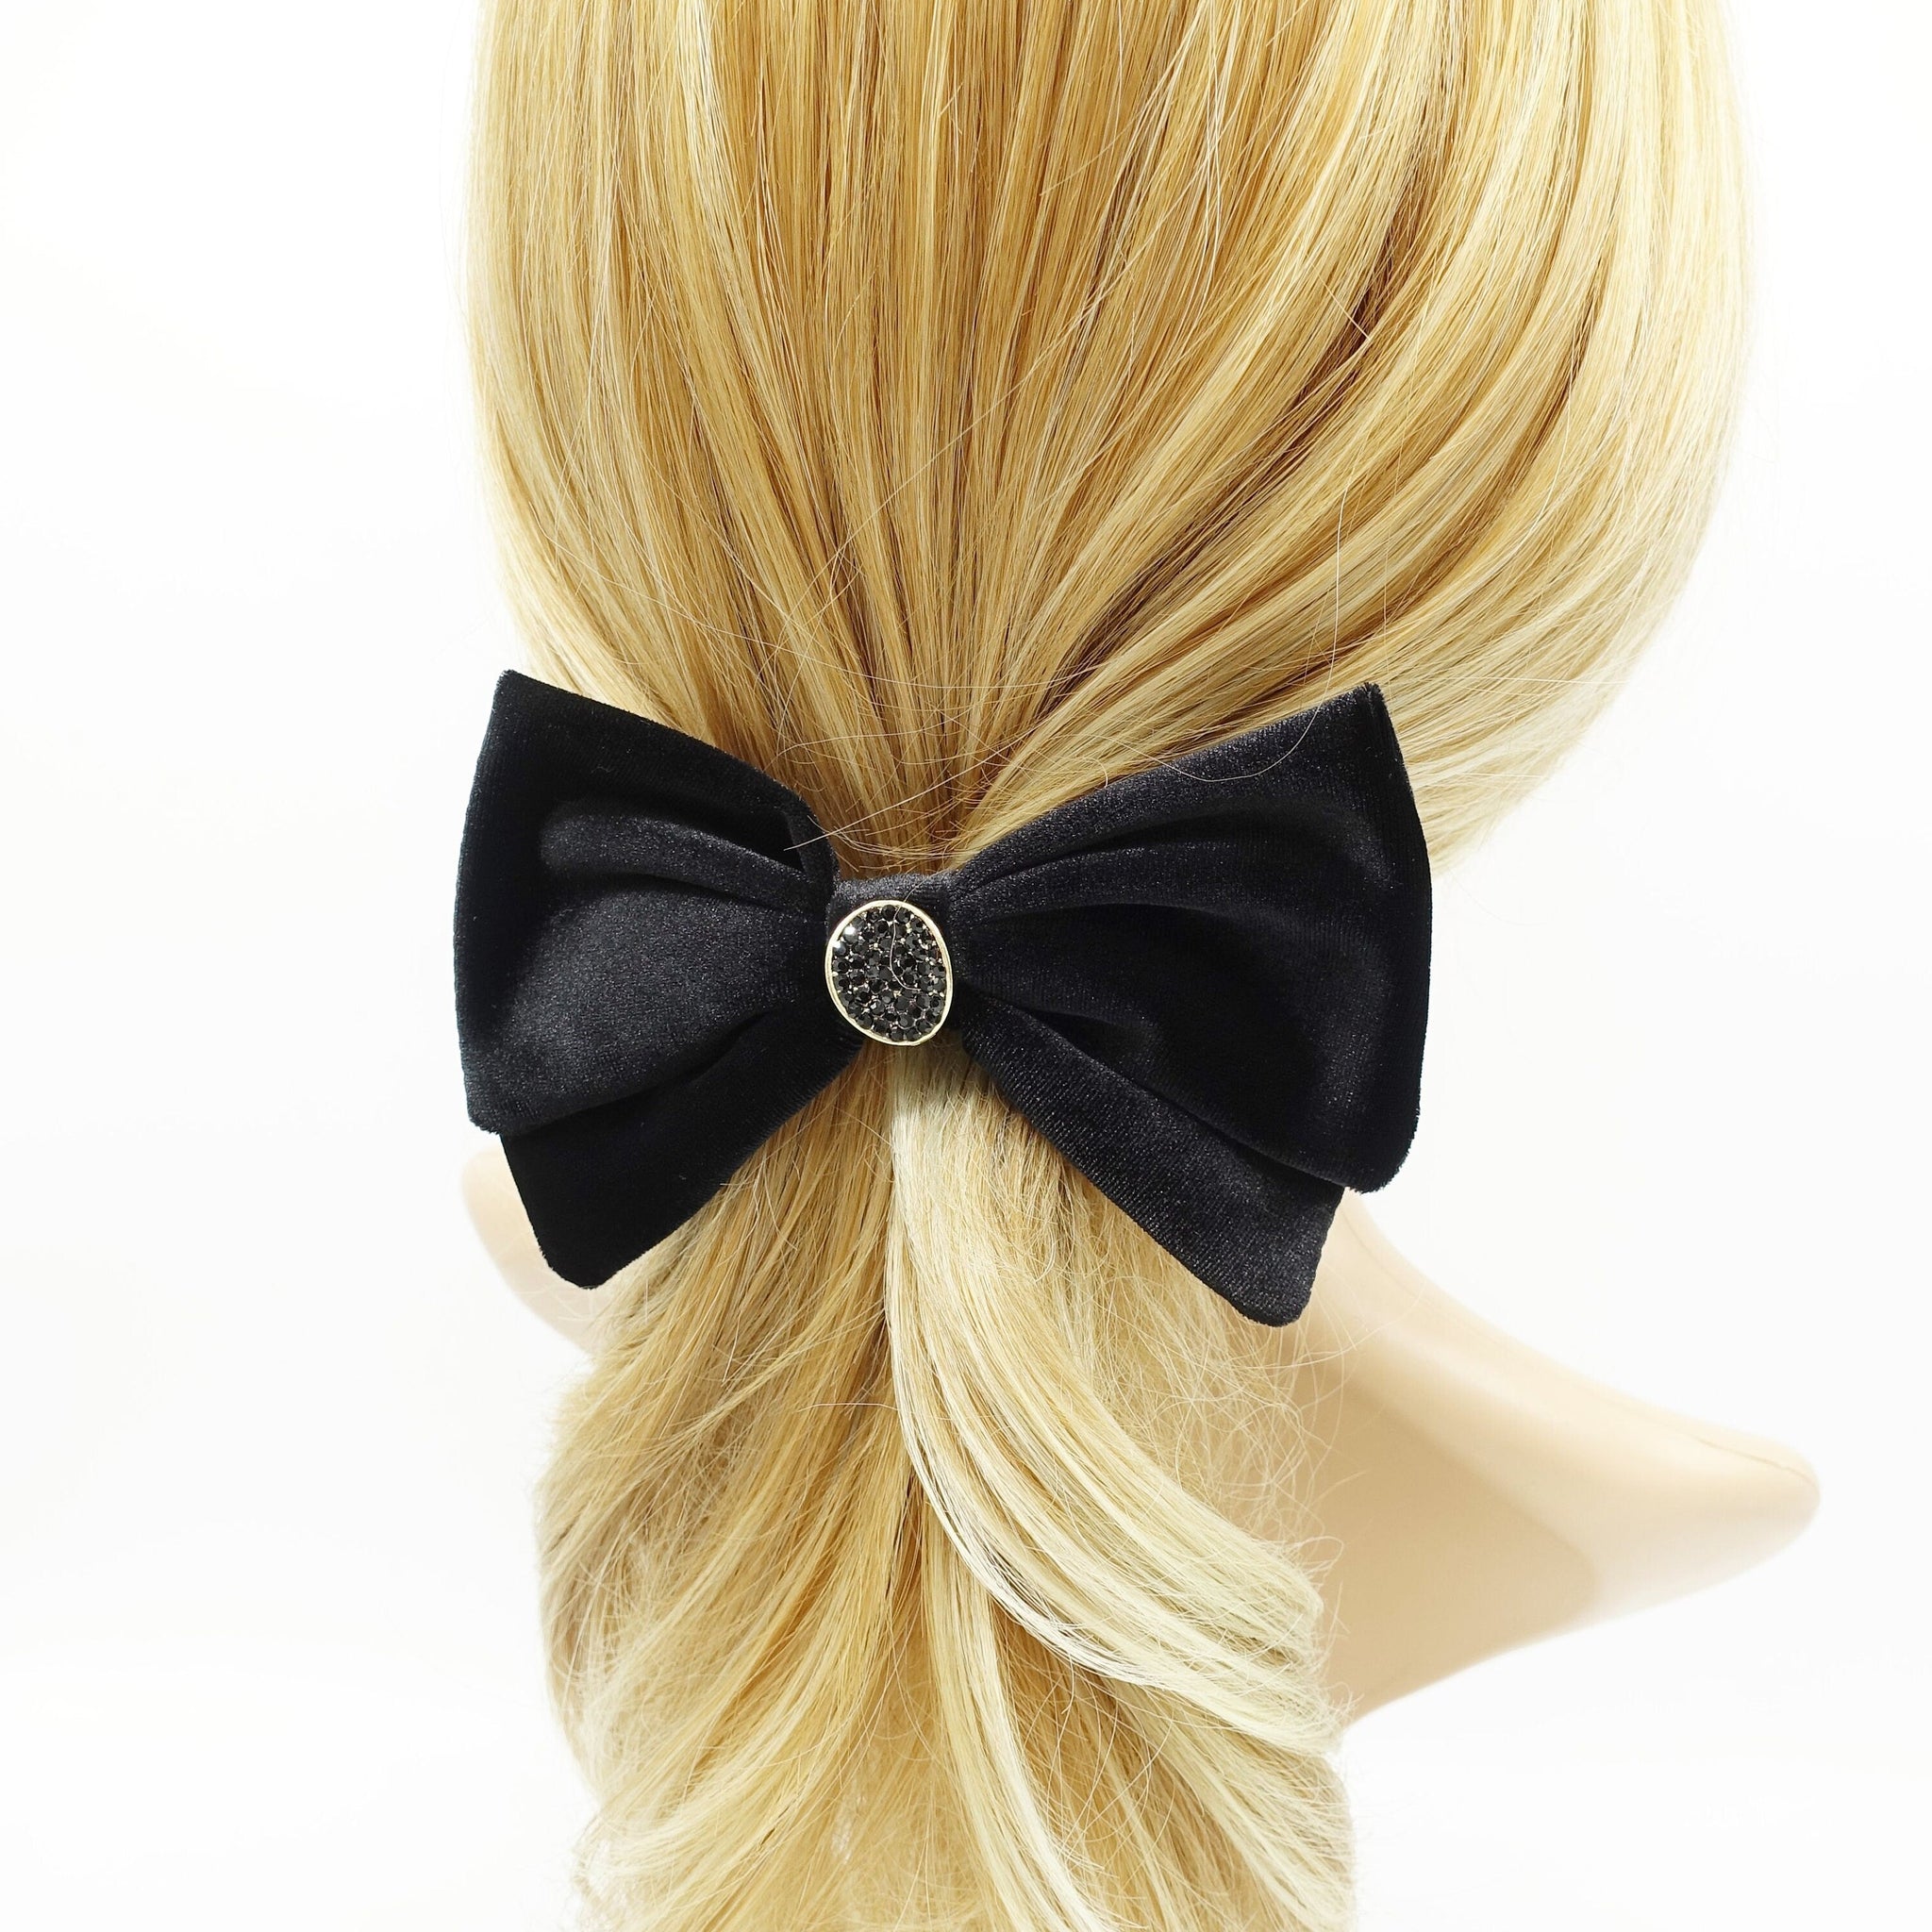 veryshine.com Barrette (Bow) Warped circle black velvet hair bow rhinestone casting embellished bling hair accessory for women